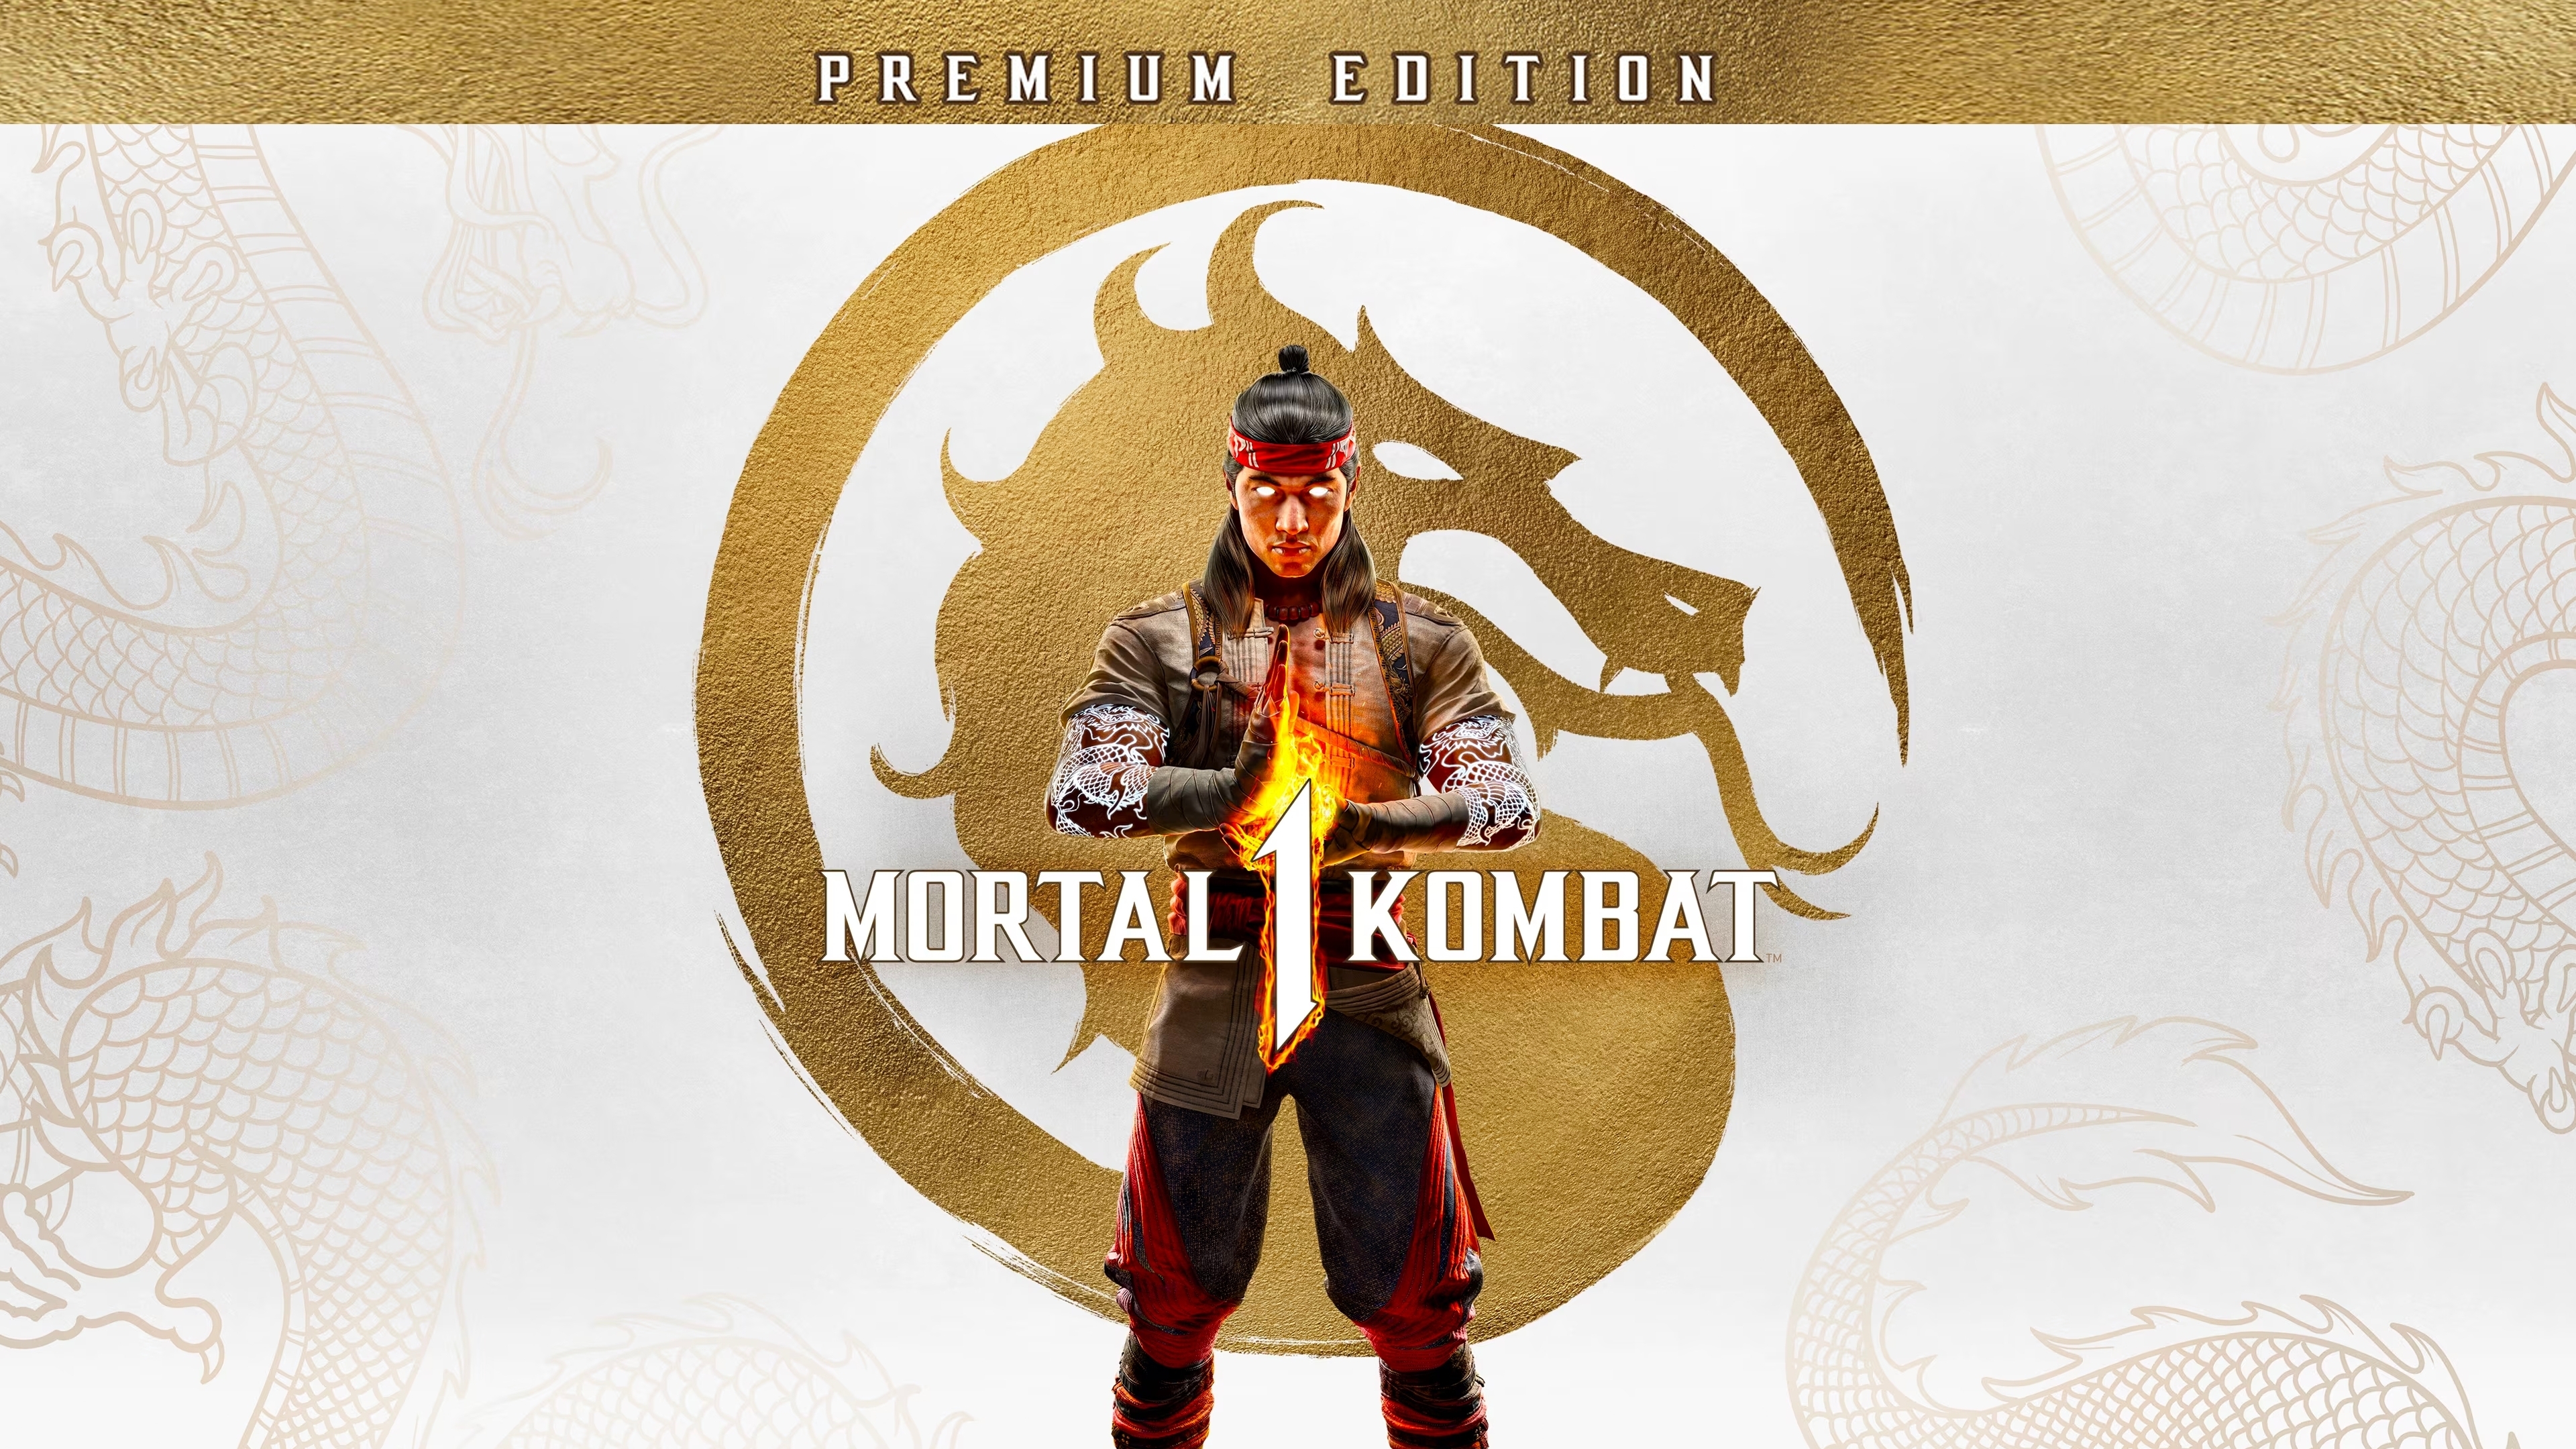 Classic fighter Mortal Kombat 4 is back on GOG